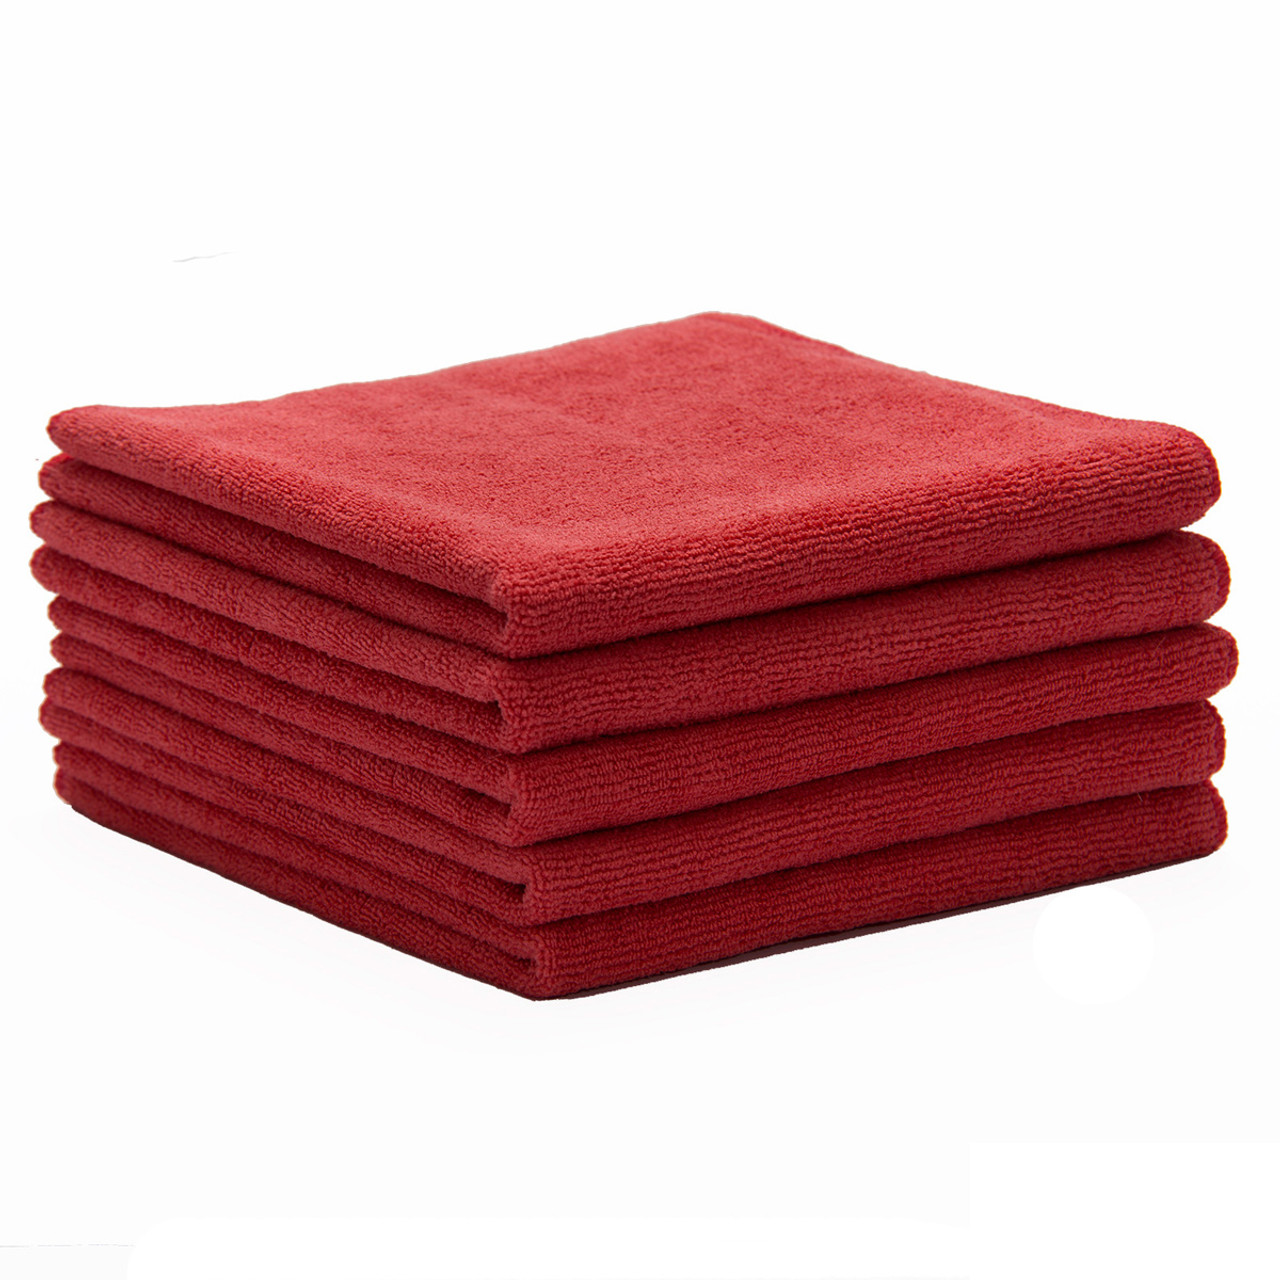 https://cdn11.bigcommerce.com/s-a5uwe4c7wz/images/stencil/1280x1280/products/524/1455/Microfiber-Towels-16x16-Heavyweight-Red__34403.1612292990.jpg?c=1